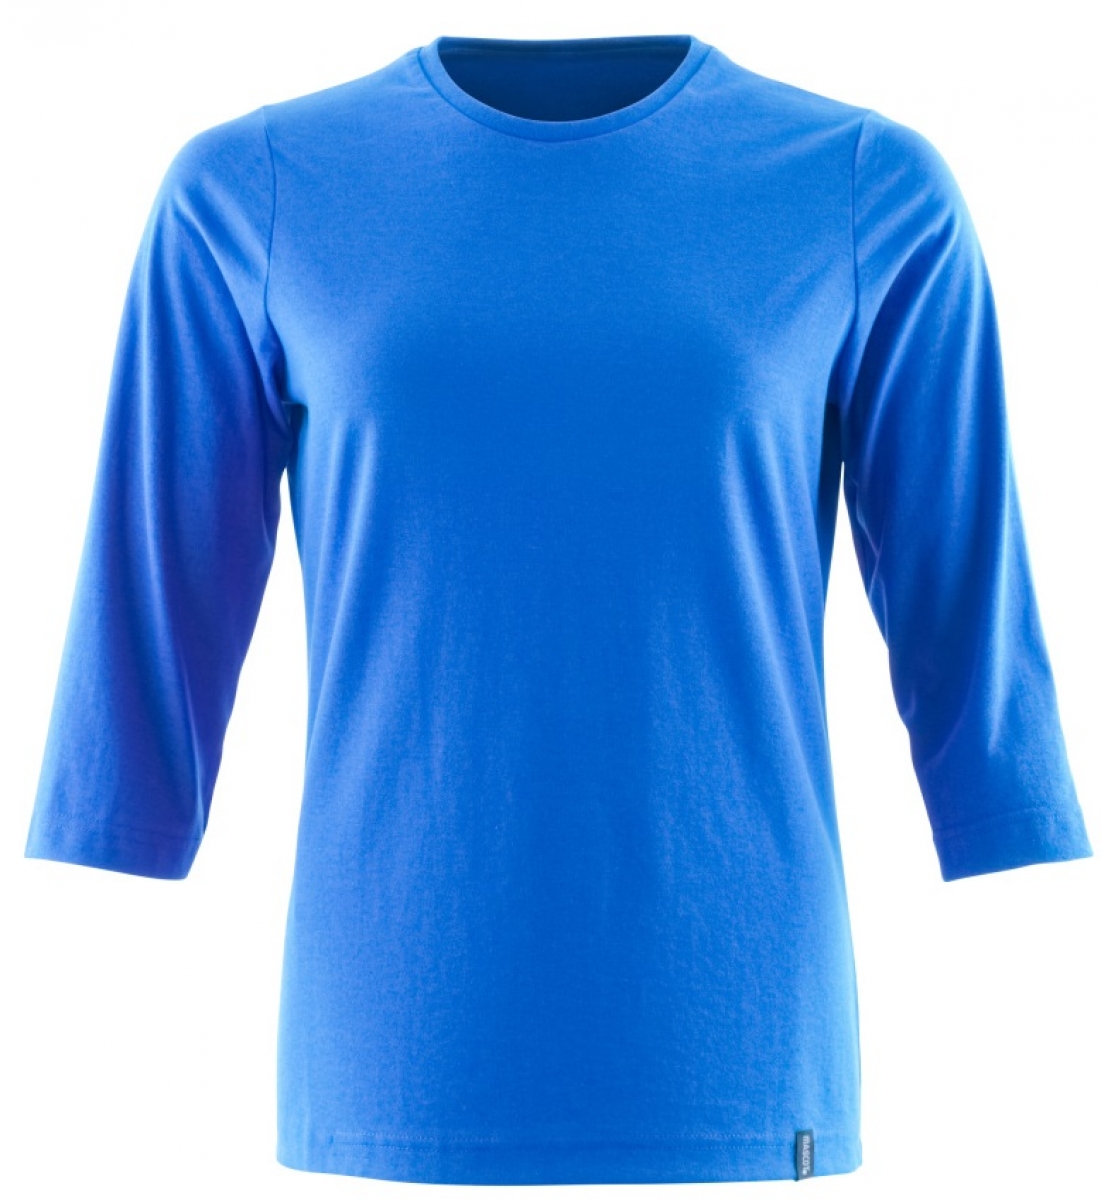 MASCOT-Worker-Shirts, Damen-T-Shirt, 3/4 Arm, azurblau